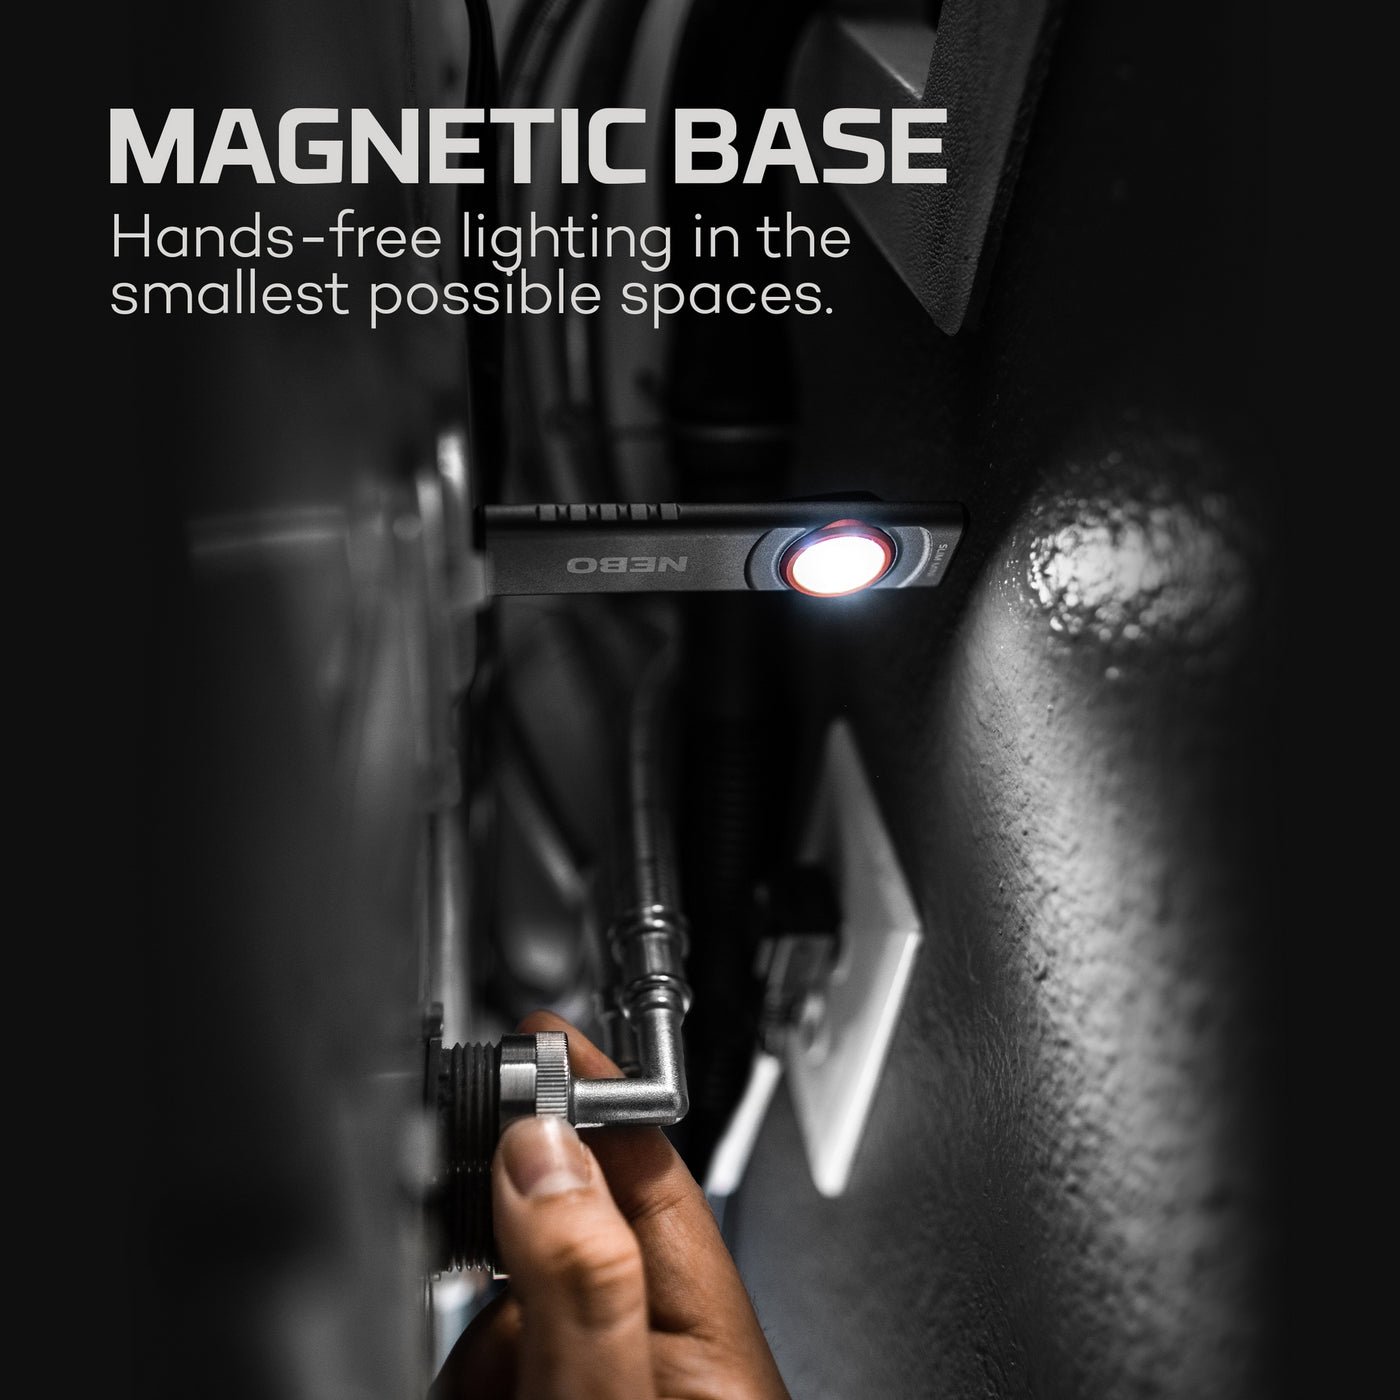 Pocket light with magnetic base